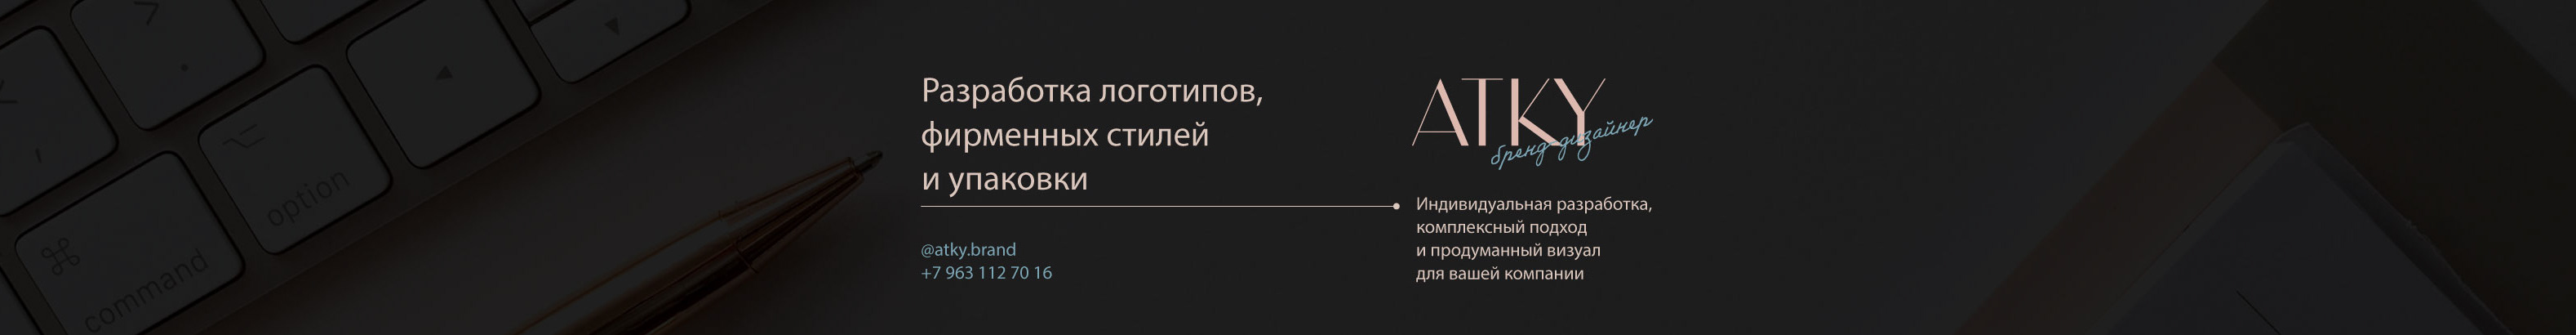 Banner de perfil de Татьяна Кунтуганова